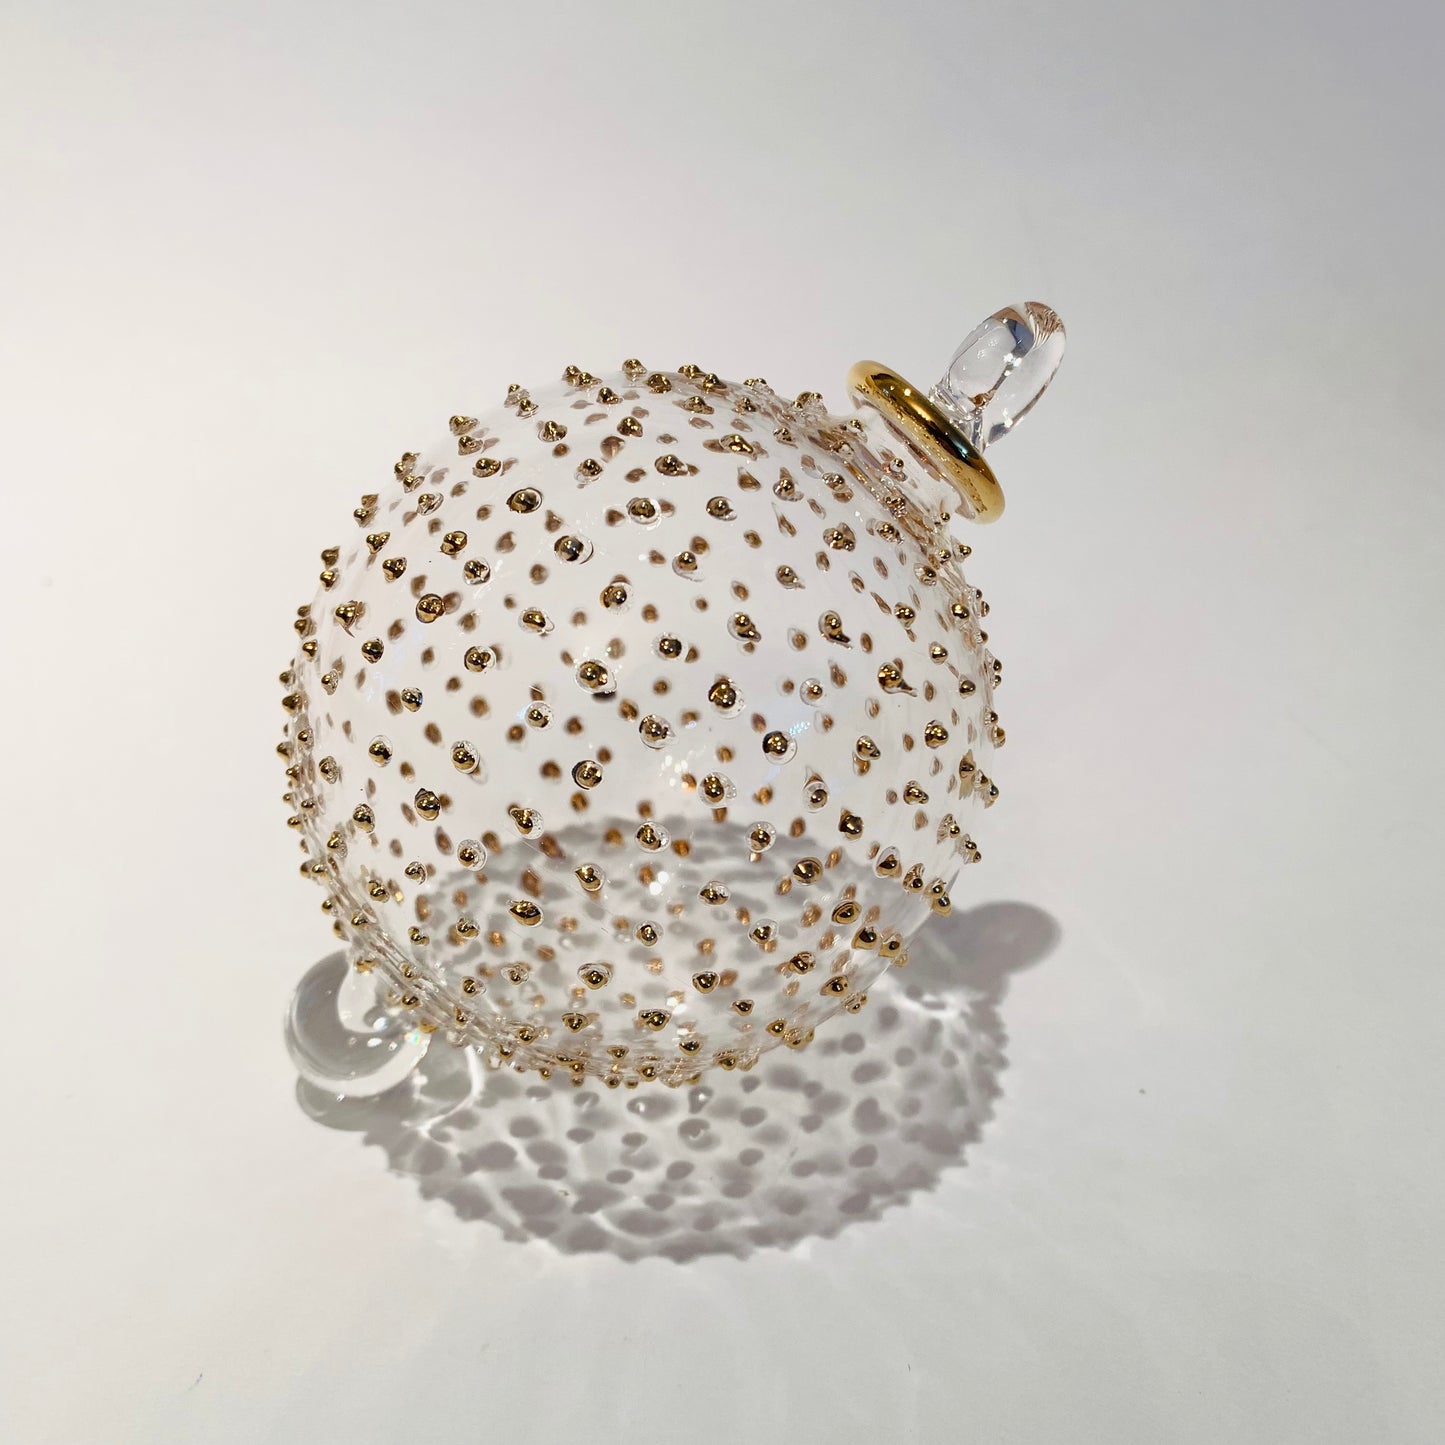 Blown Glass Ornament - Gold Dots